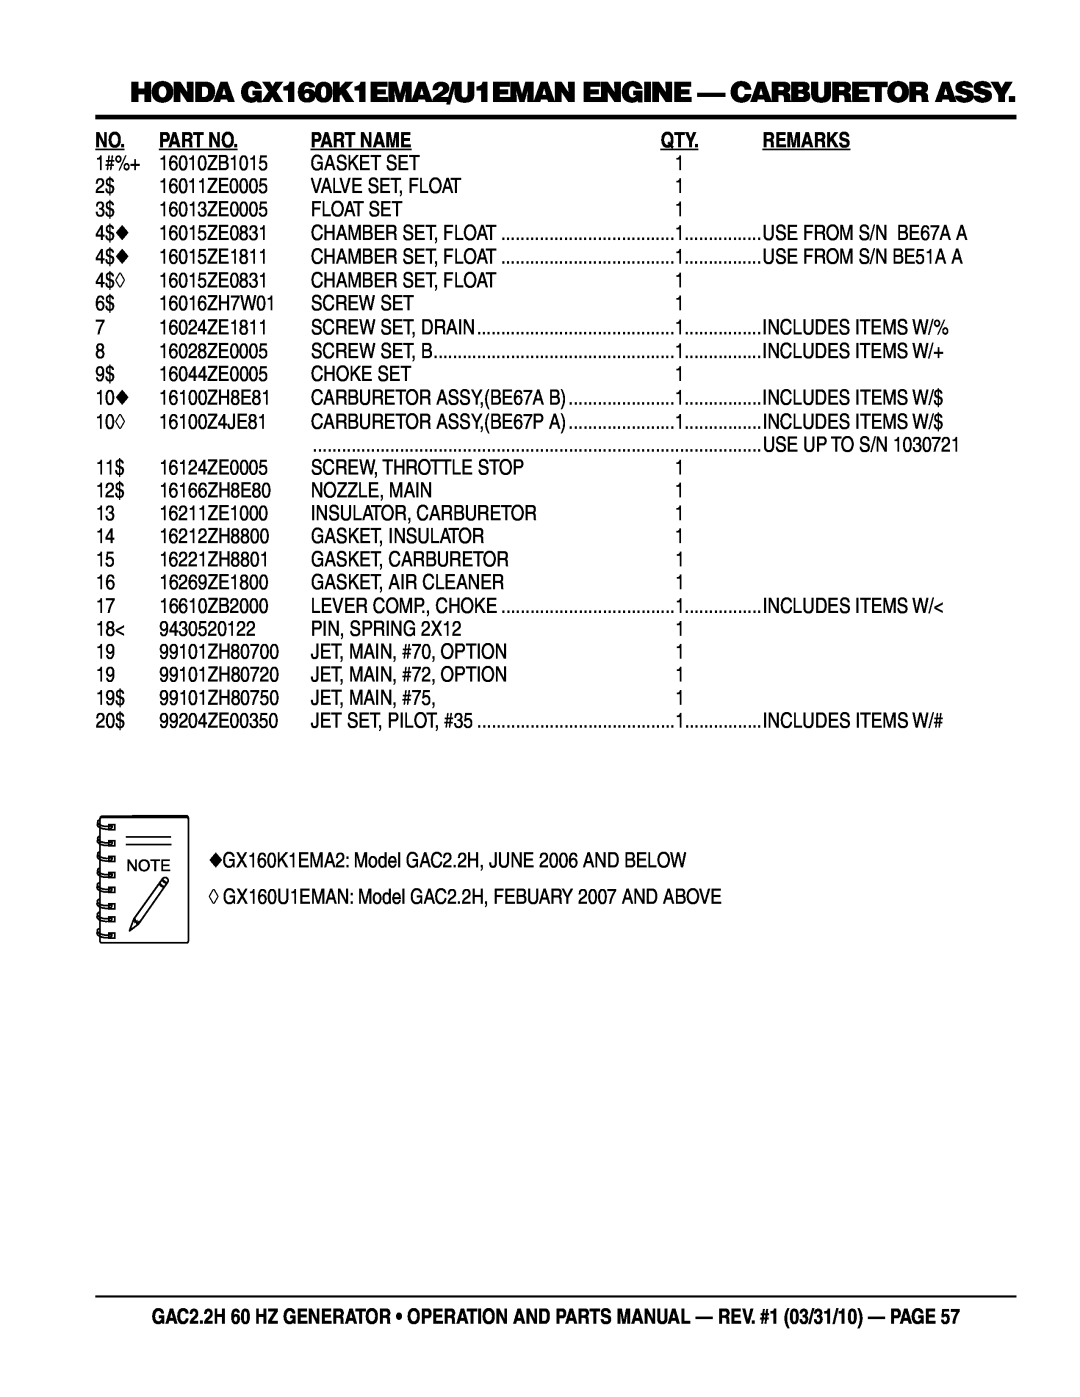 Multiquip GAC2.2H manual HONDA GX160K1EMA2/U1EMAN engine - caRBURETOR assy, Part Name, Remarks, 16010ZB1015 